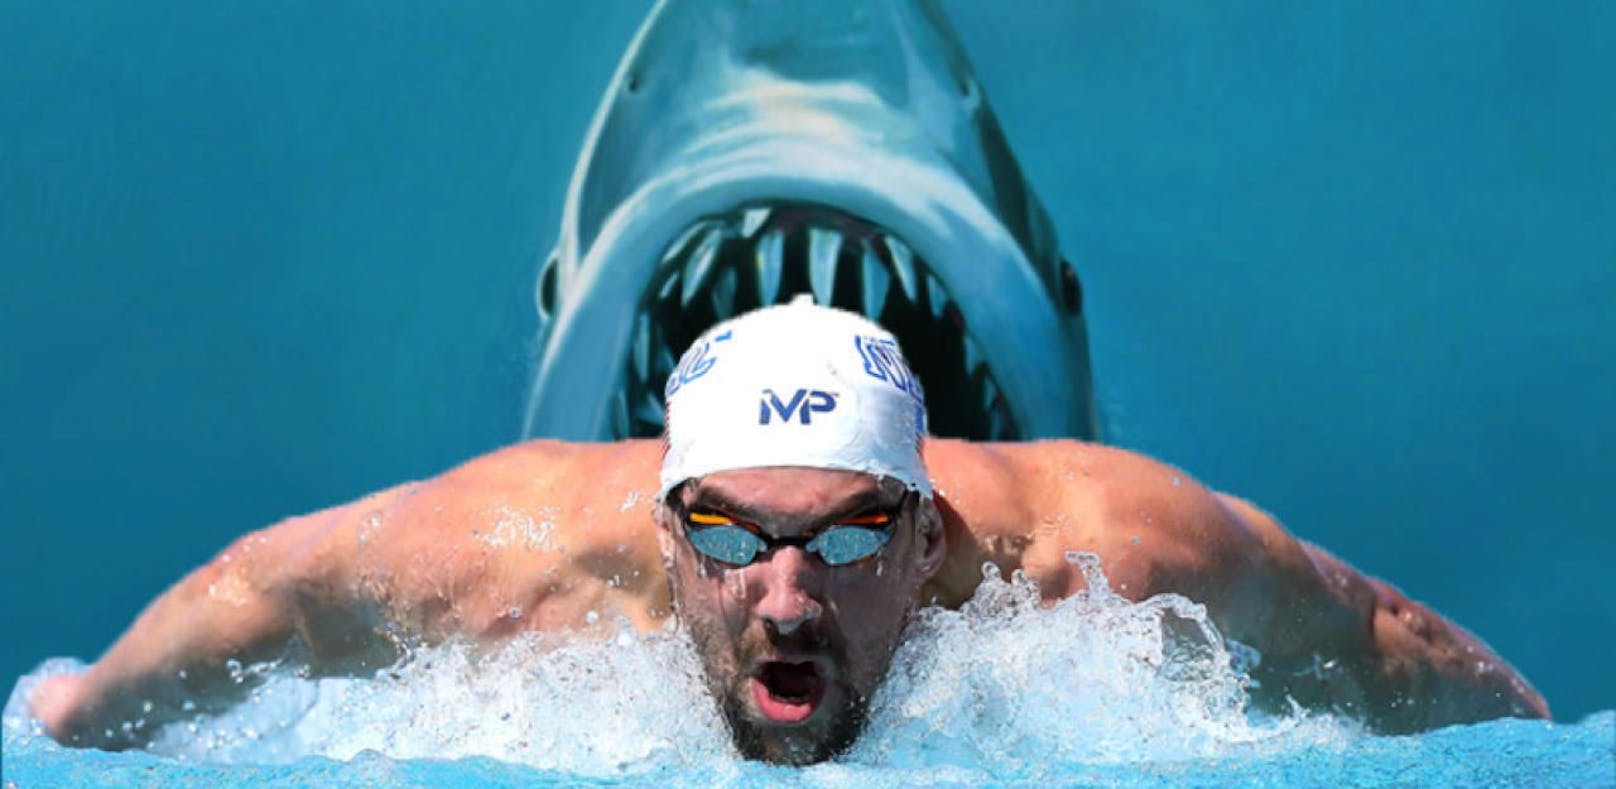 Digital-Hai! Phelps ärgert Fans mit Fake-Wettkampf